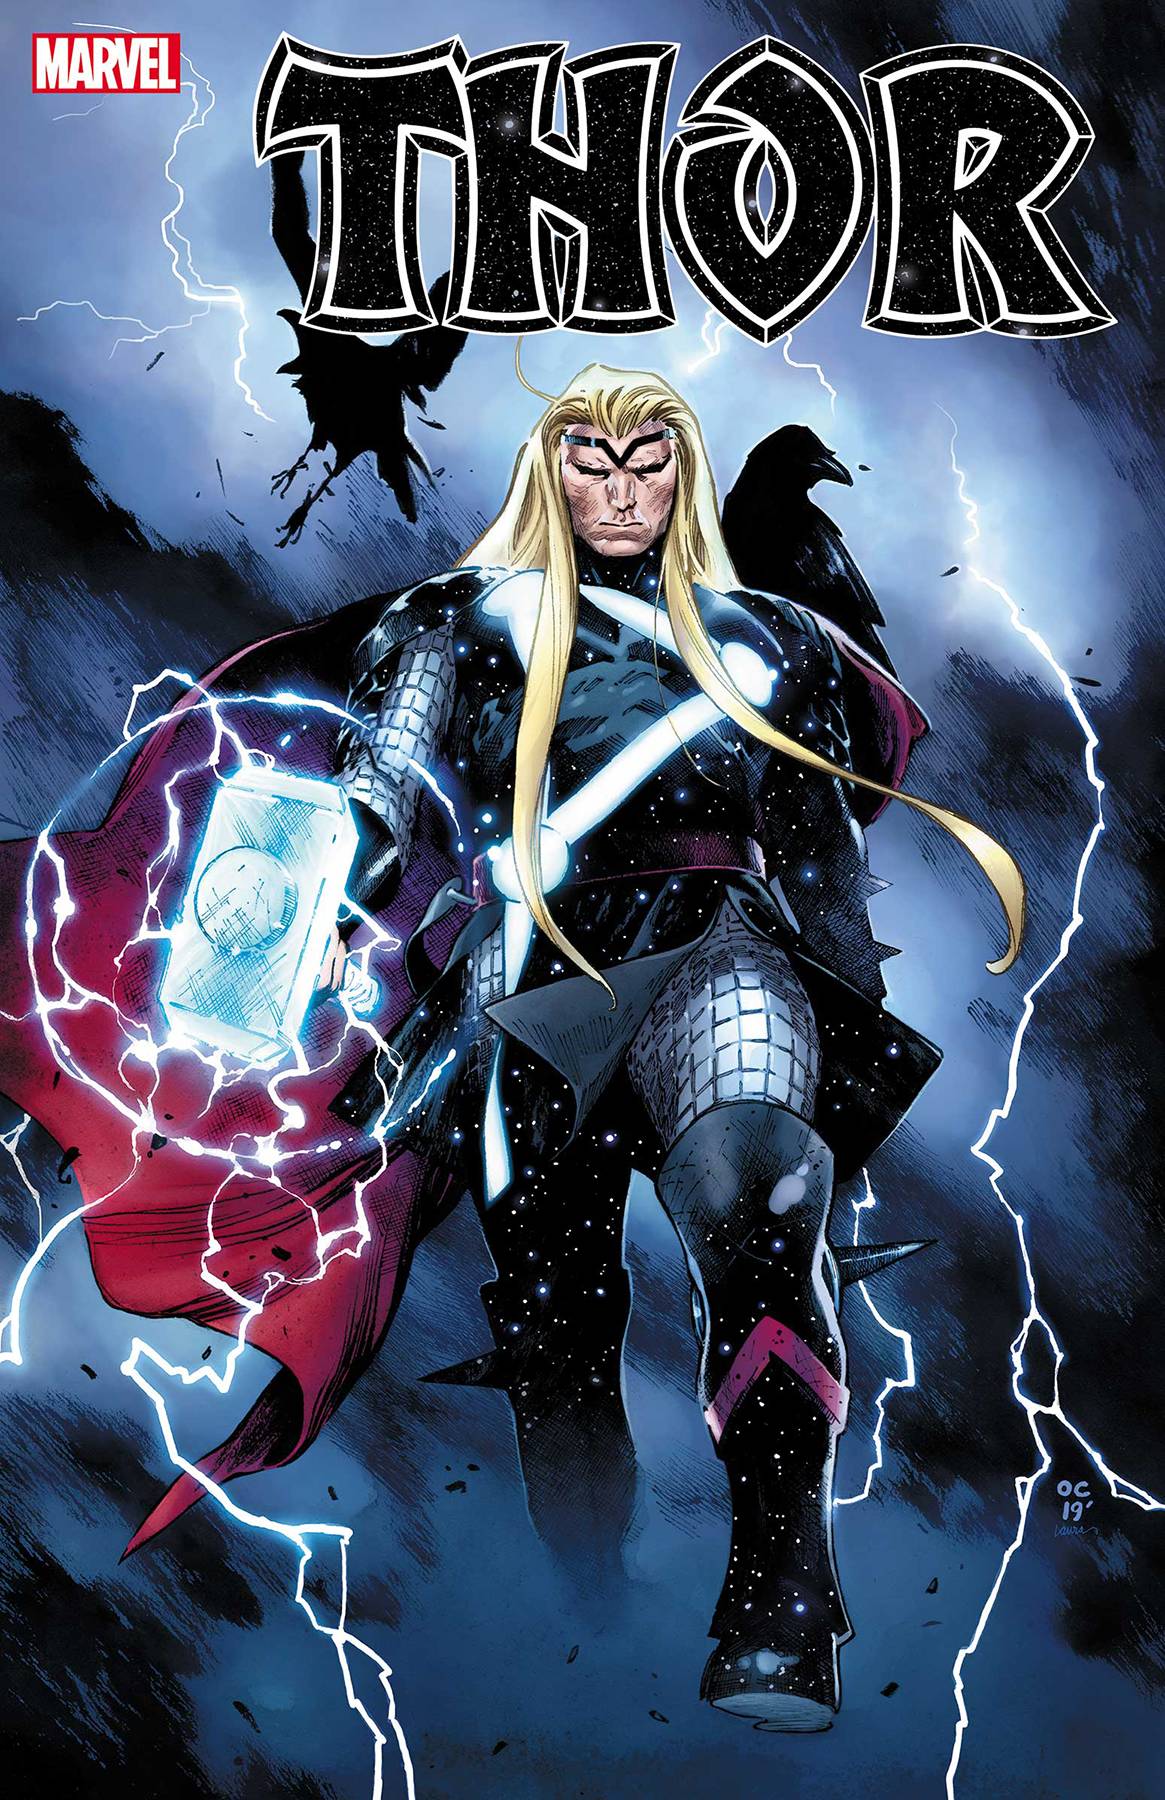 Thor #1 - State of Comics